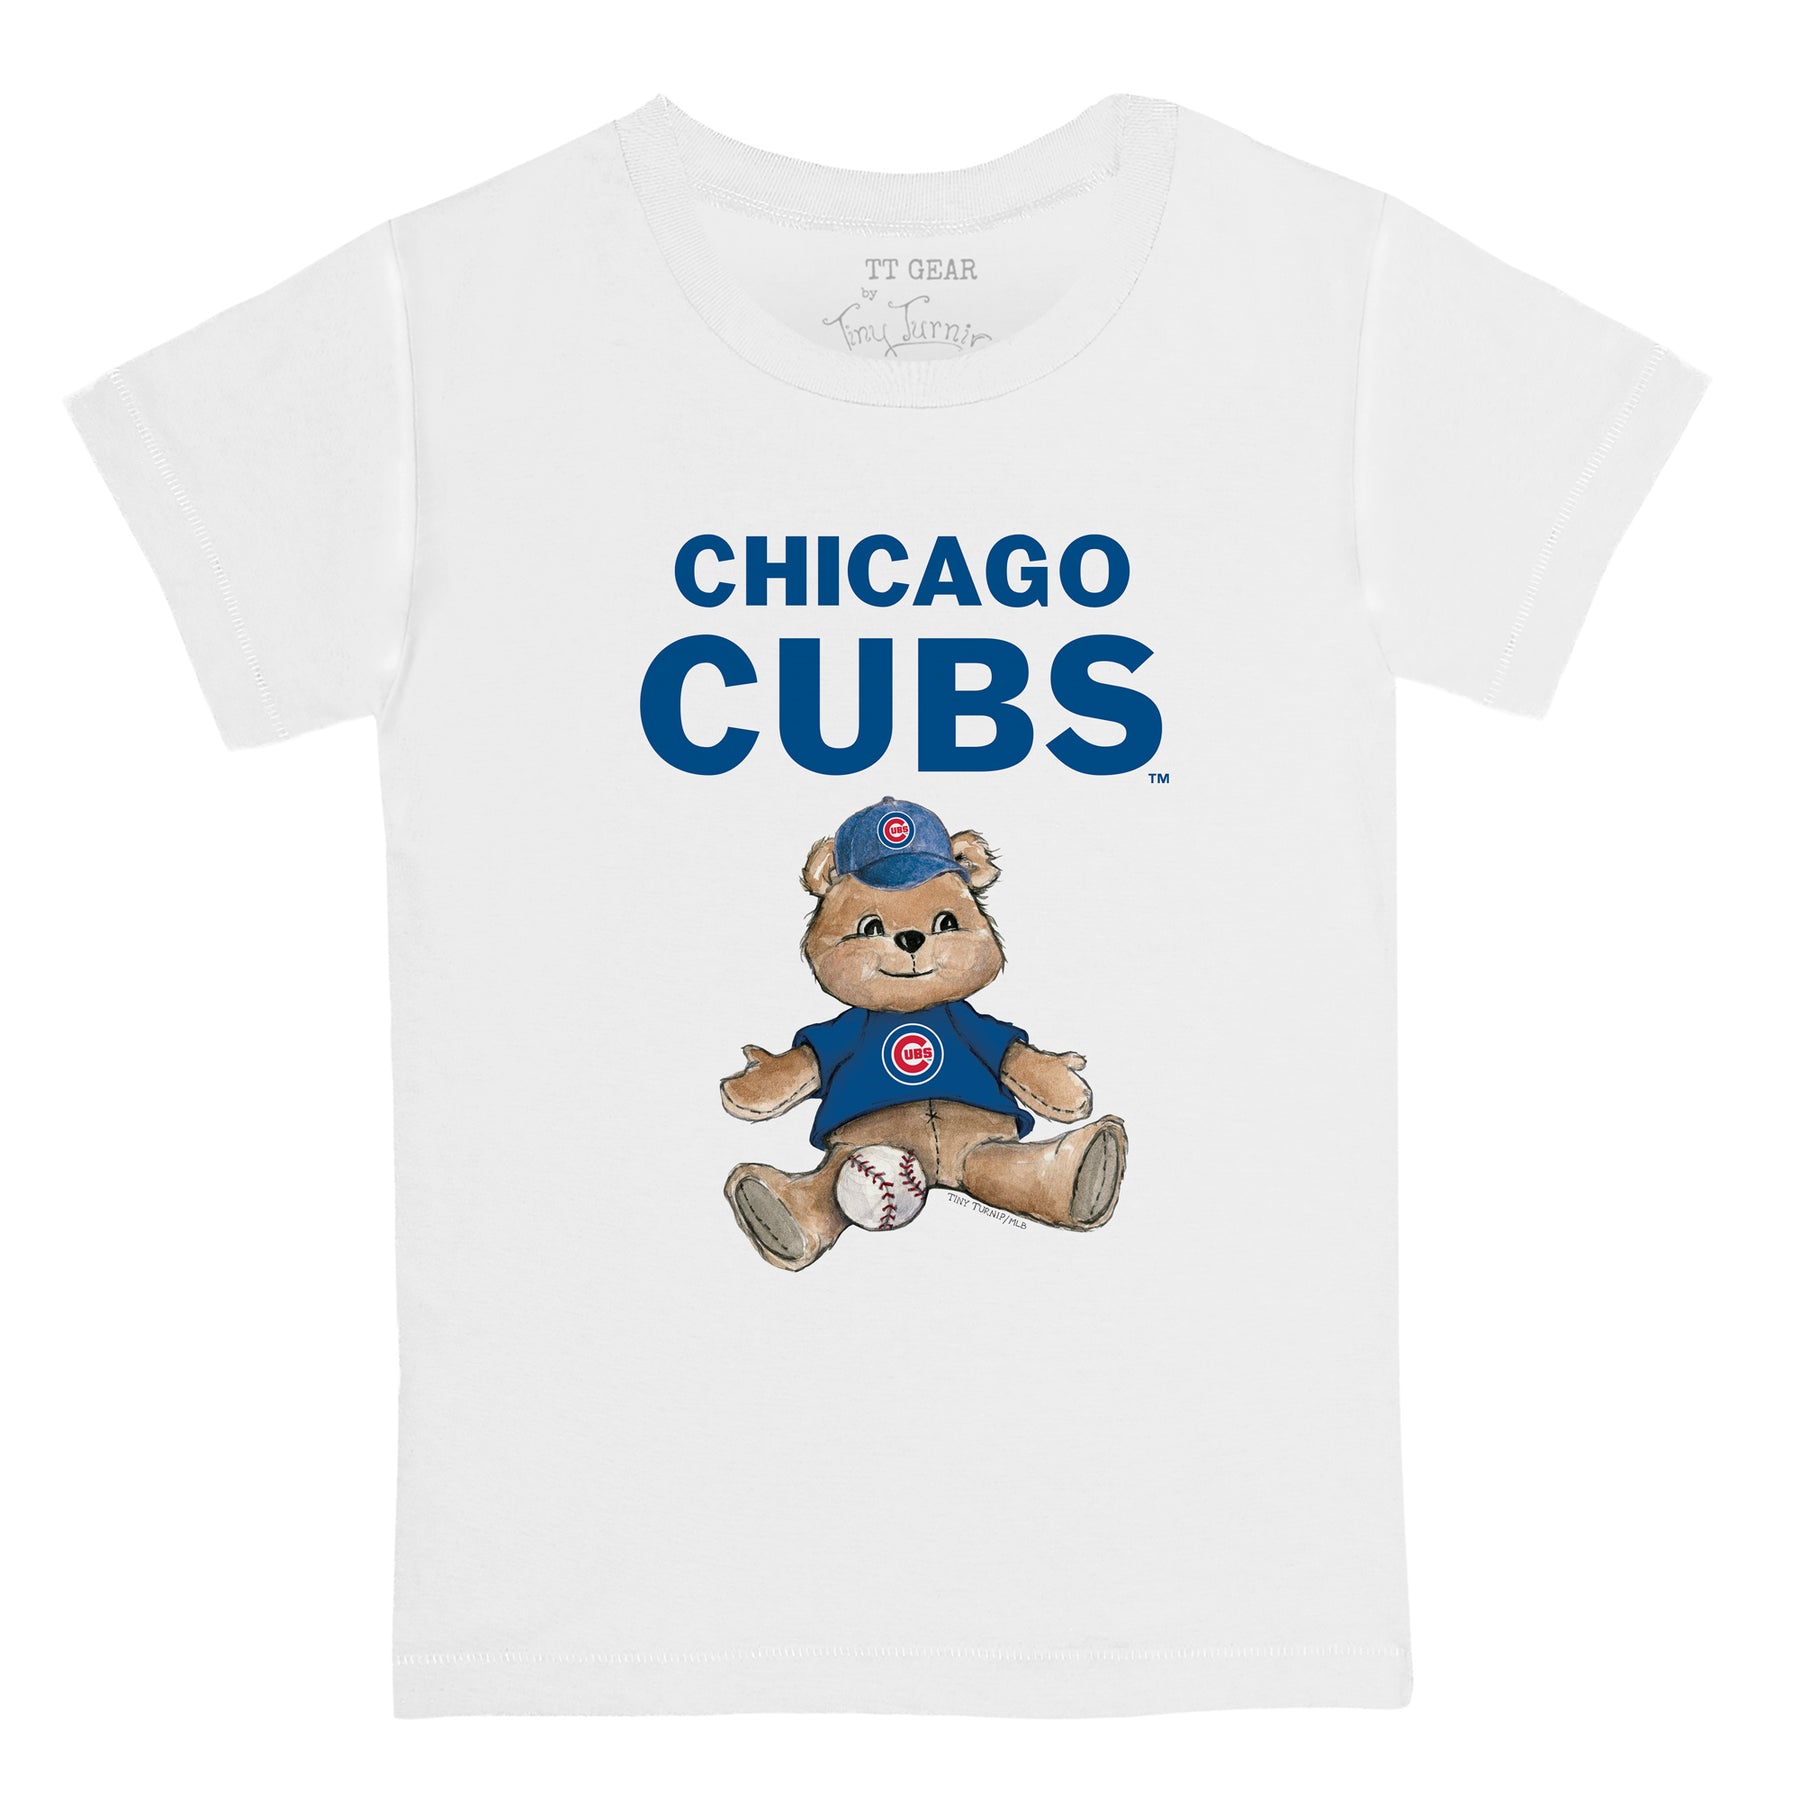 Lids Chicago Cubs Tiny Turnip Women's Shark Logo T-Shirt - White